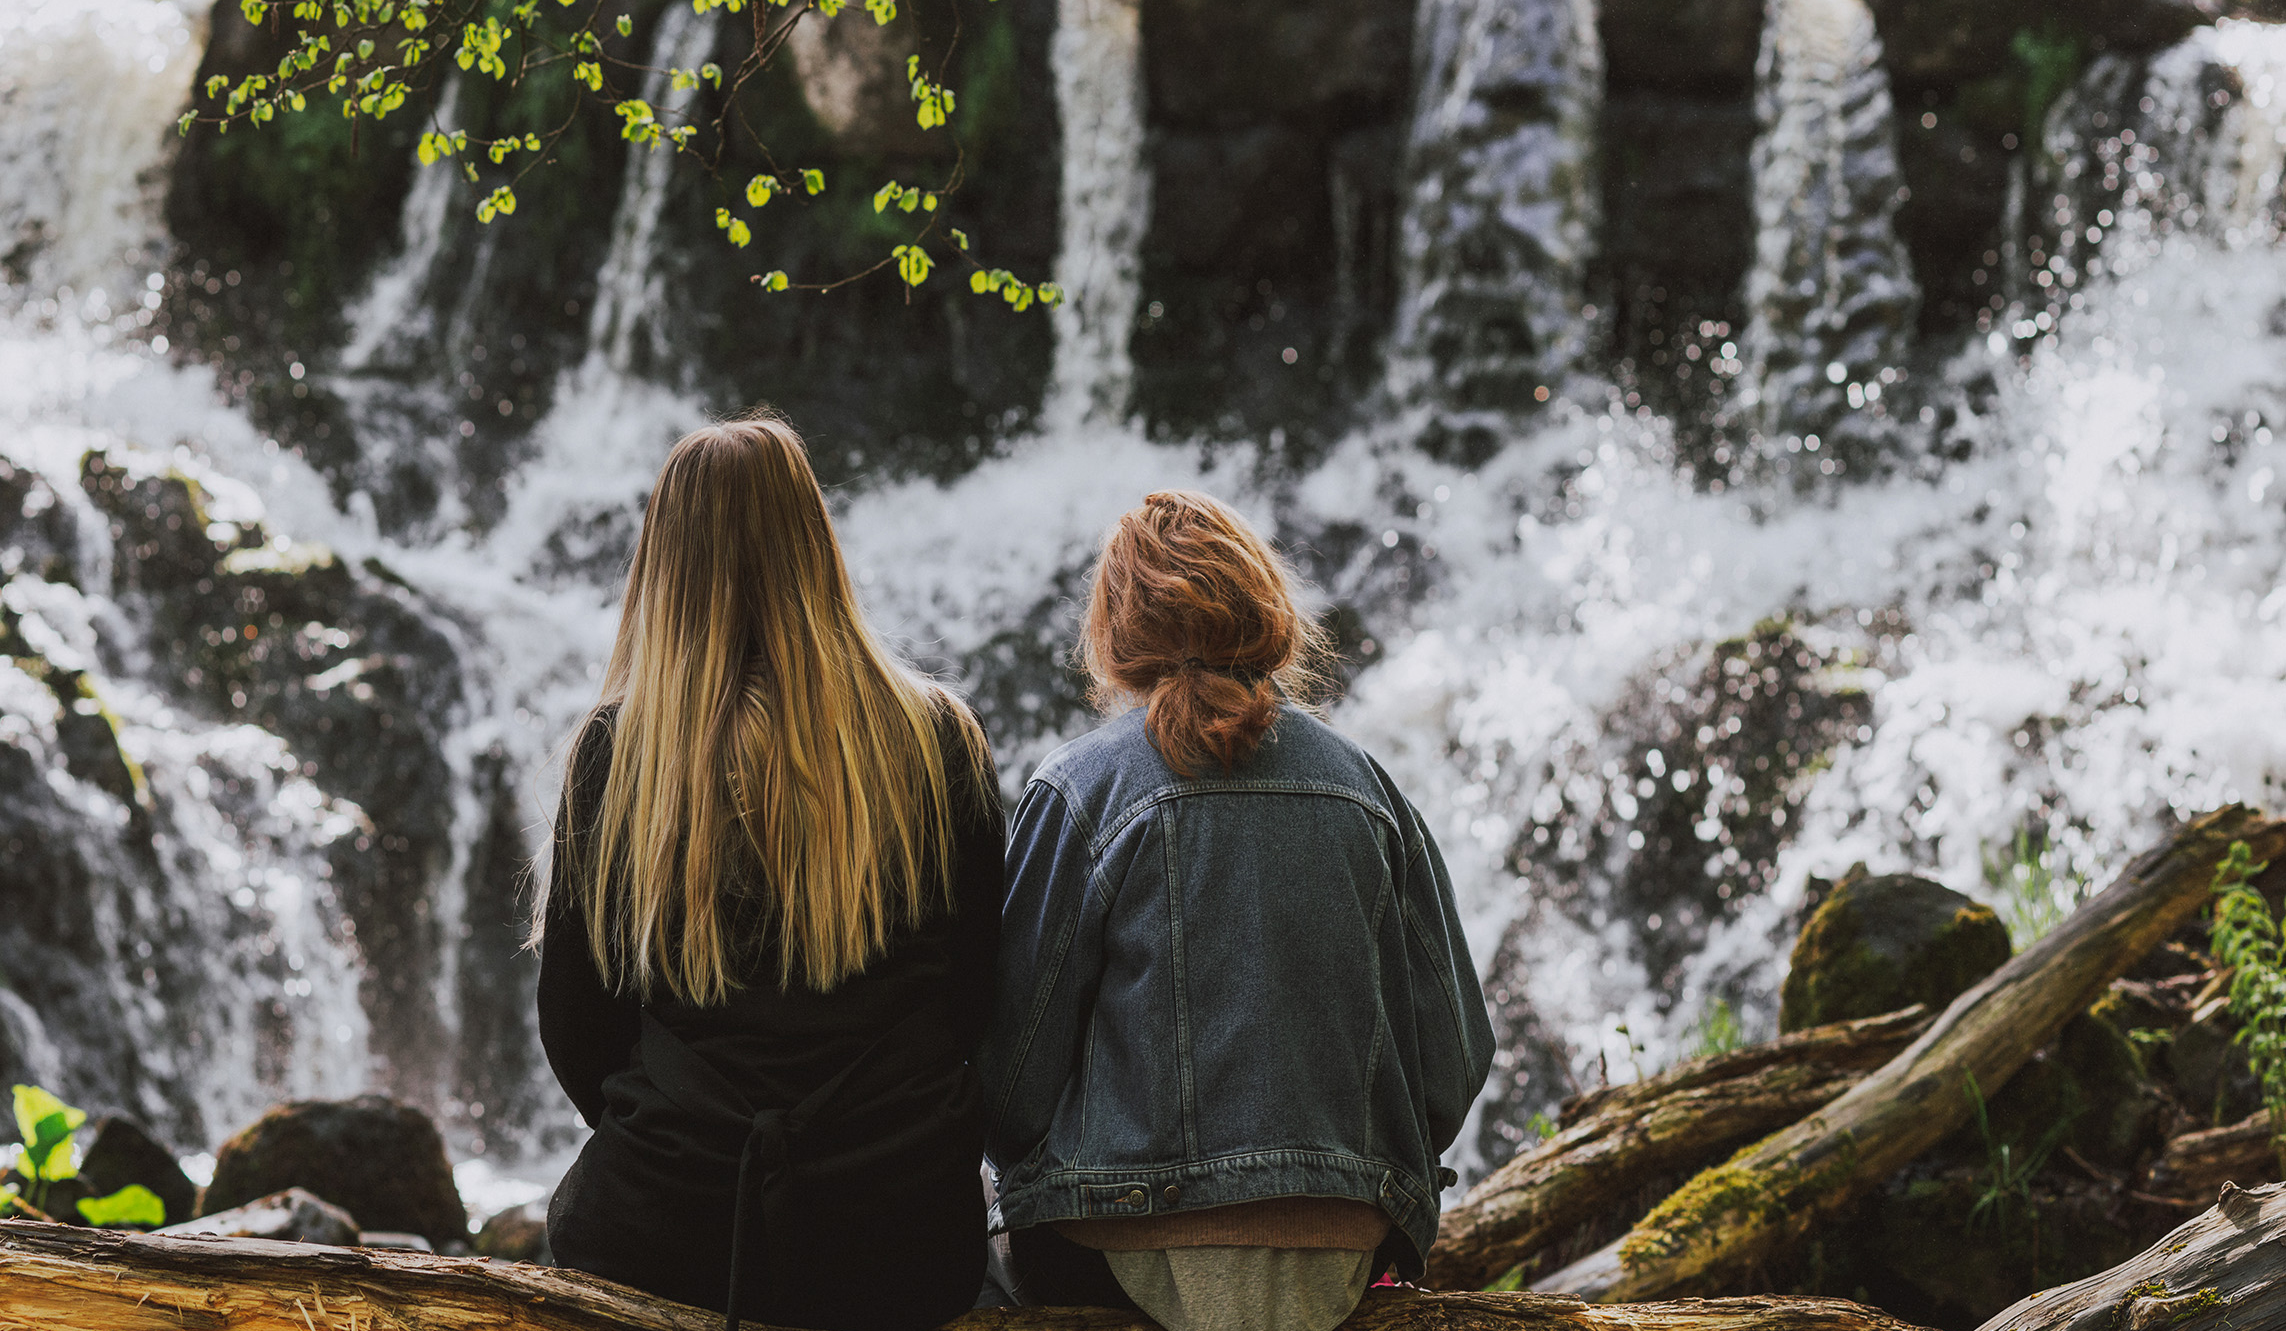 Two persons enjoying a break overlooking a beautiful waterfall.